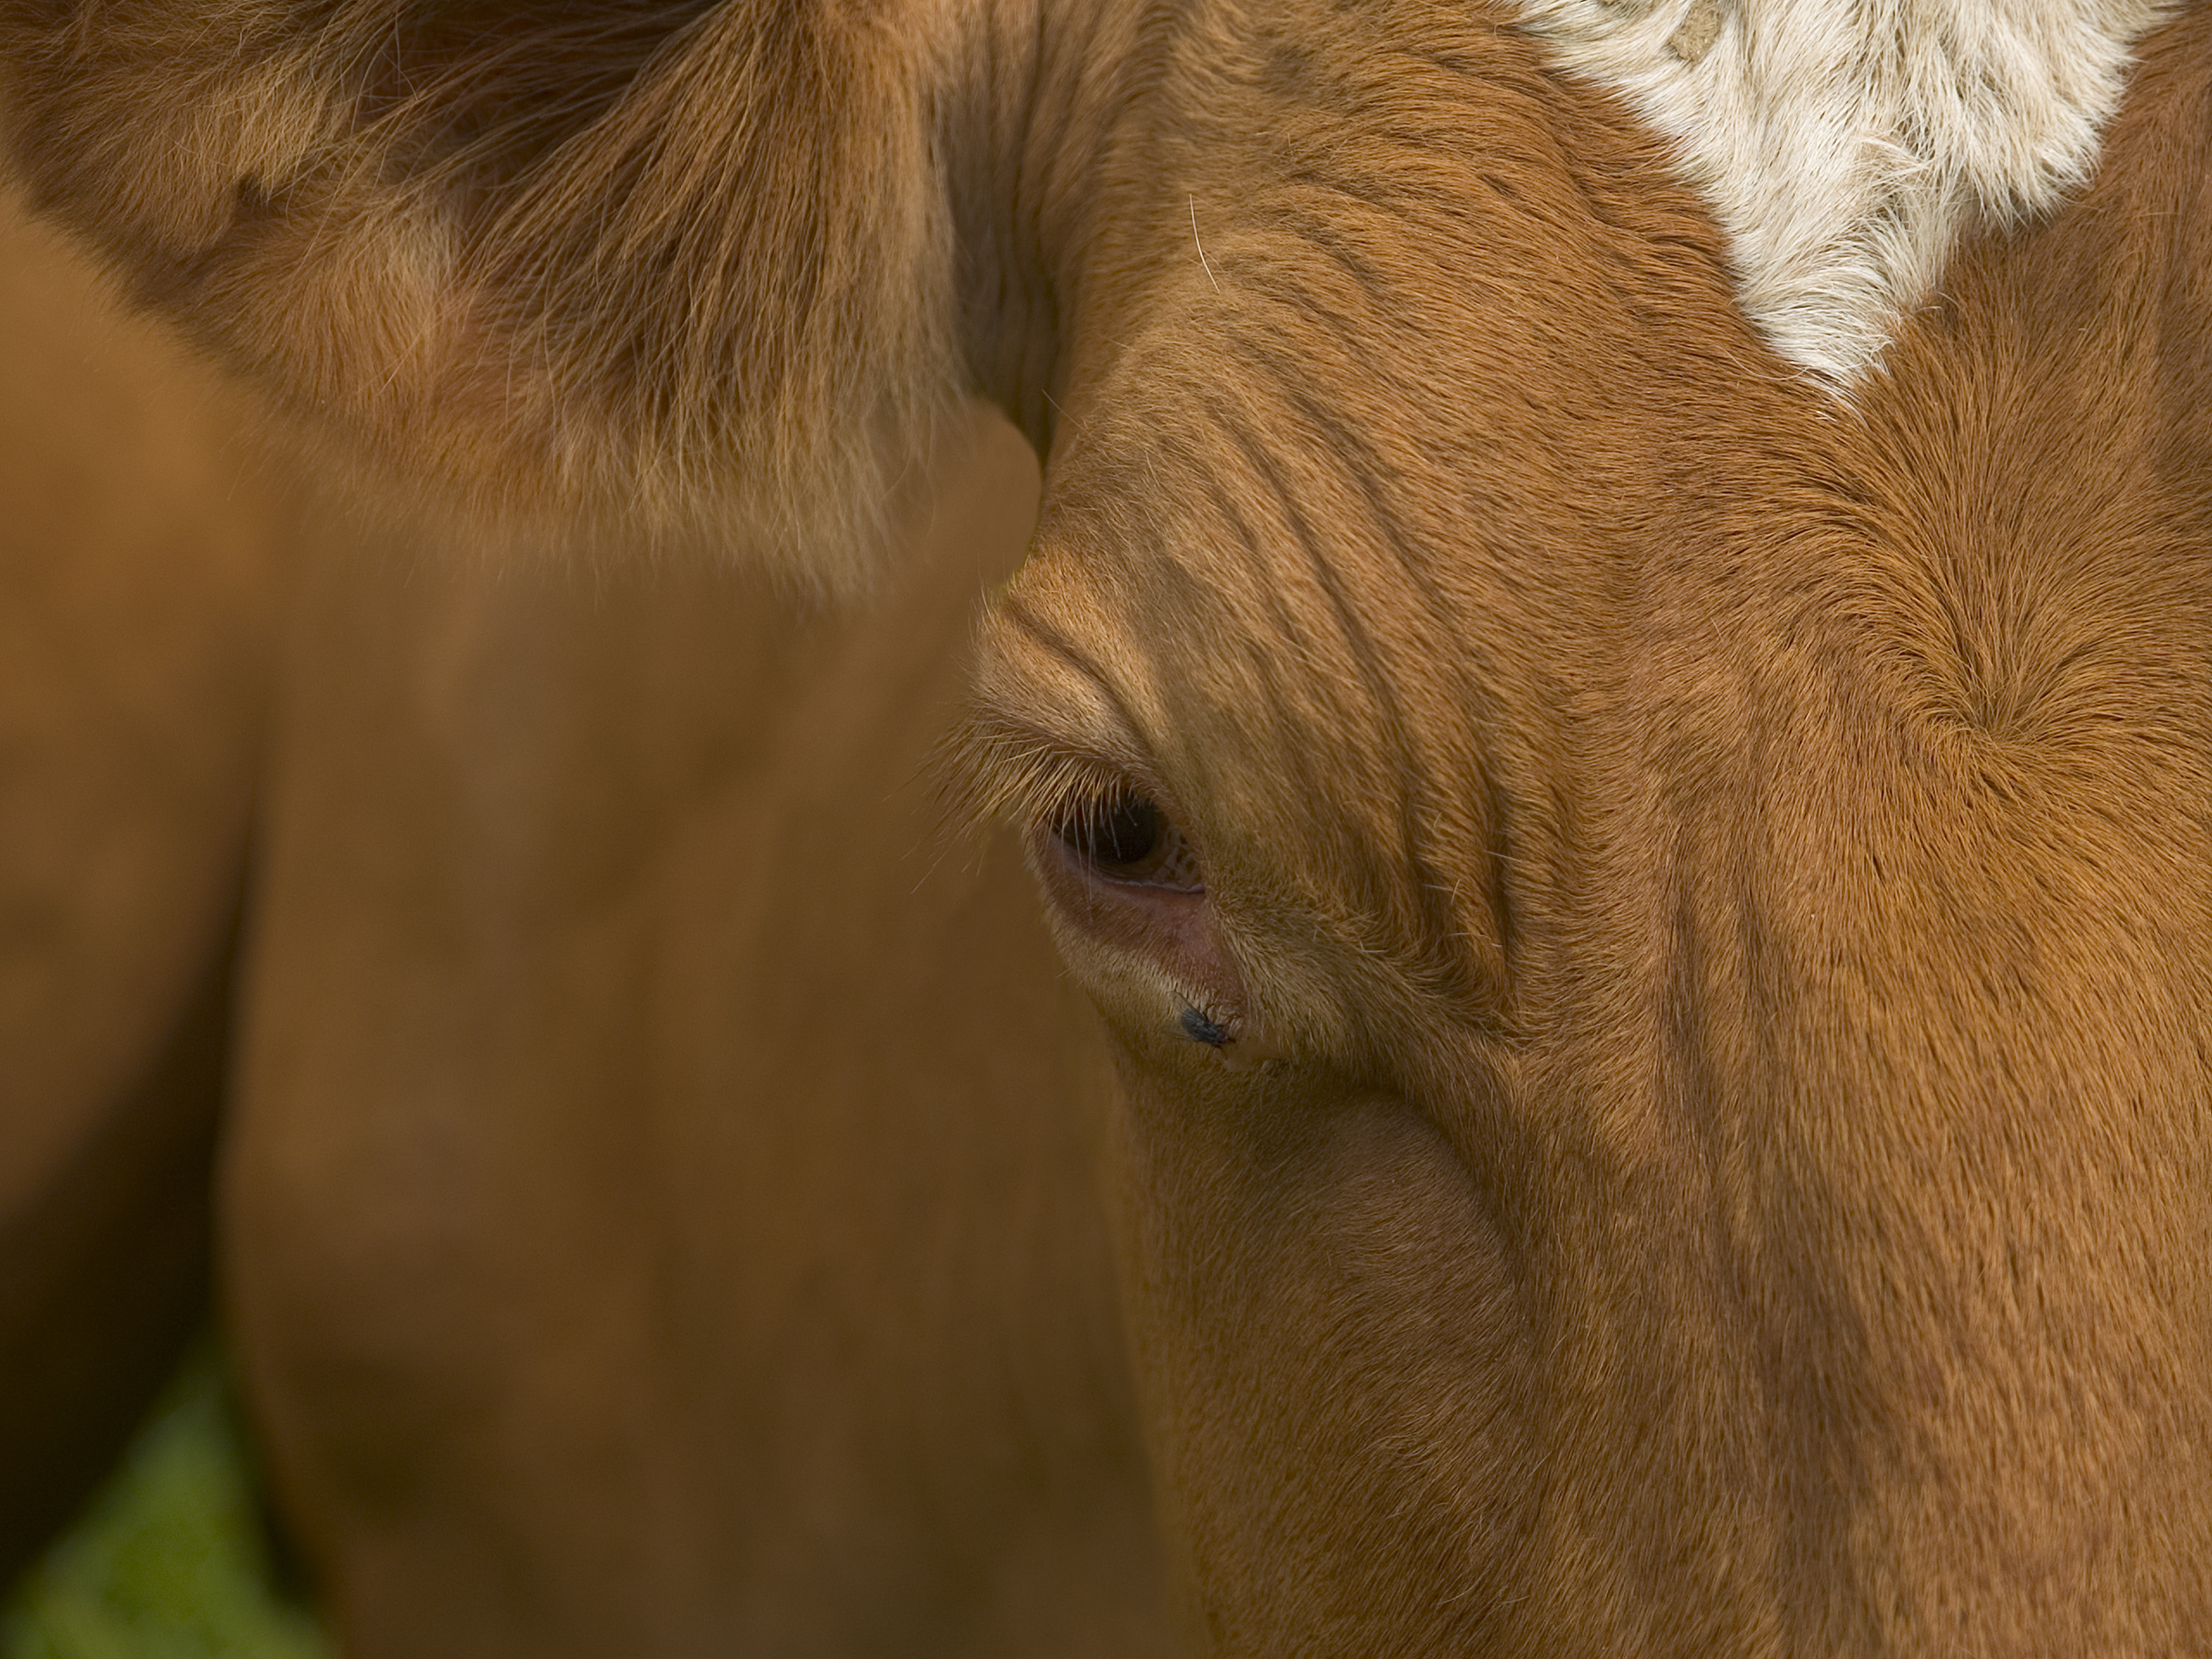 Cows head close up